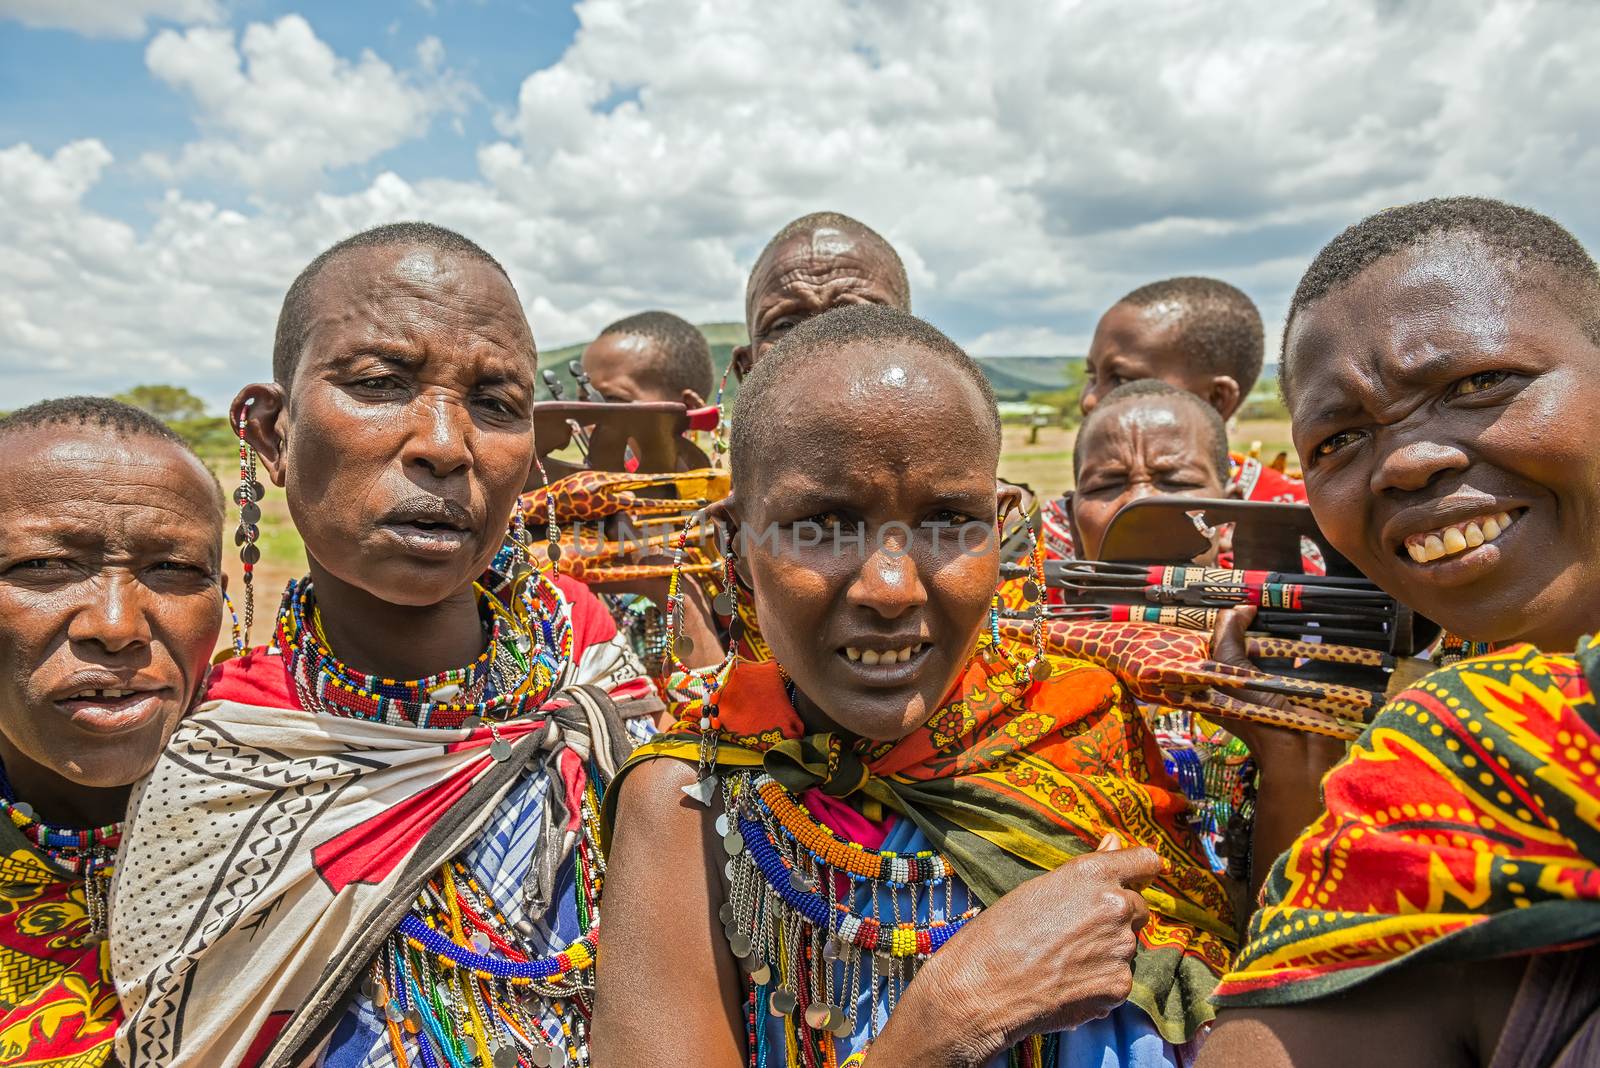 MAASAI MARA, KENYA - OCTOBER 16, 2014: Group of Maasai people with traditional jewelry selling their homemade souvenirs. The Maasai are a Nilotic ethnic group of semi-nomadic people inhabiting southern Kenya and northern Tanzania.